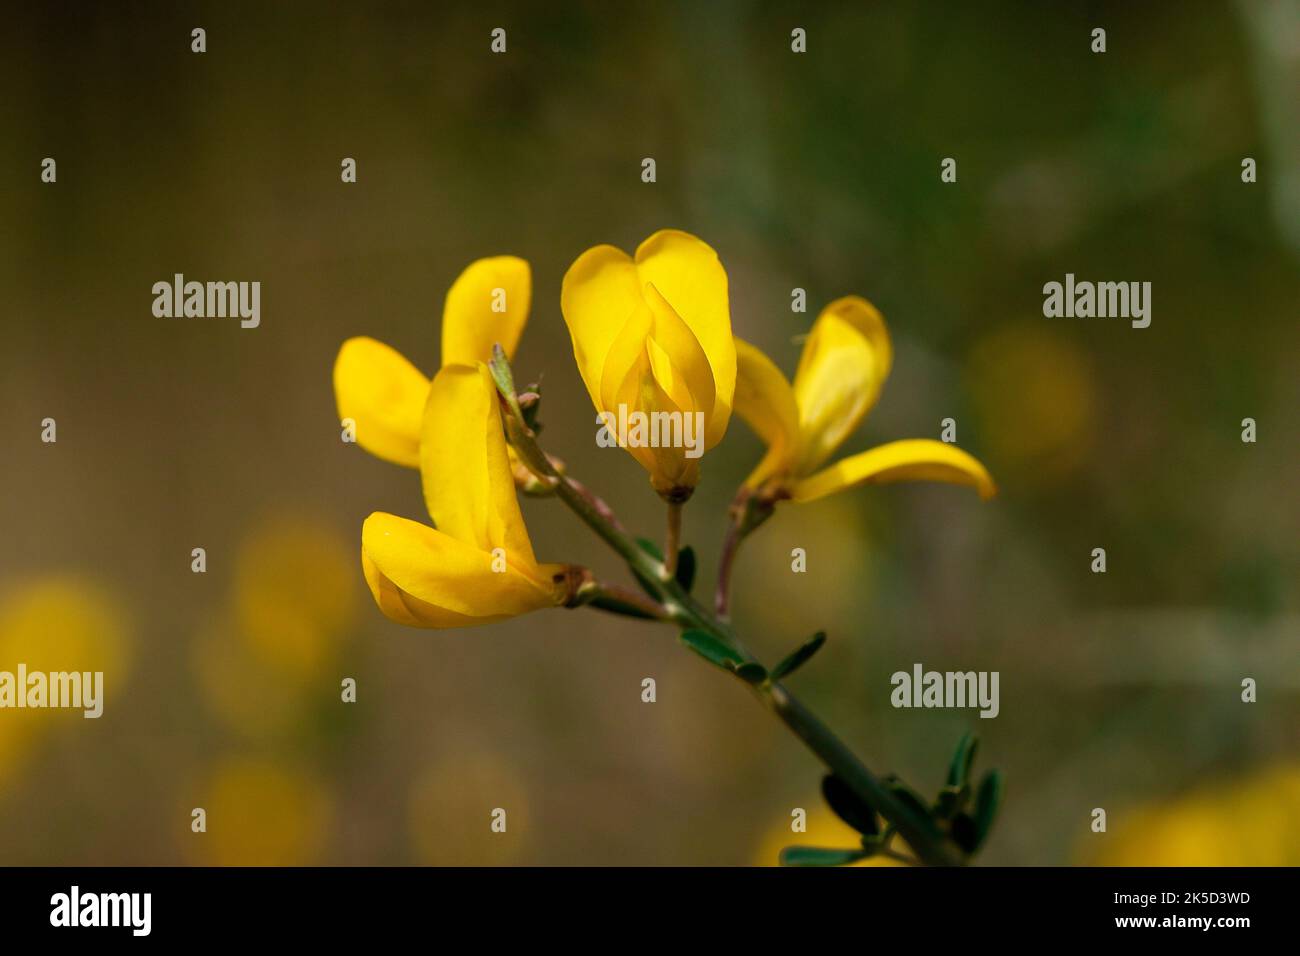 Italy, Sicily, Zingaro National Park, spring, macro, yellow flowers backlit, background blurred Stock Photo